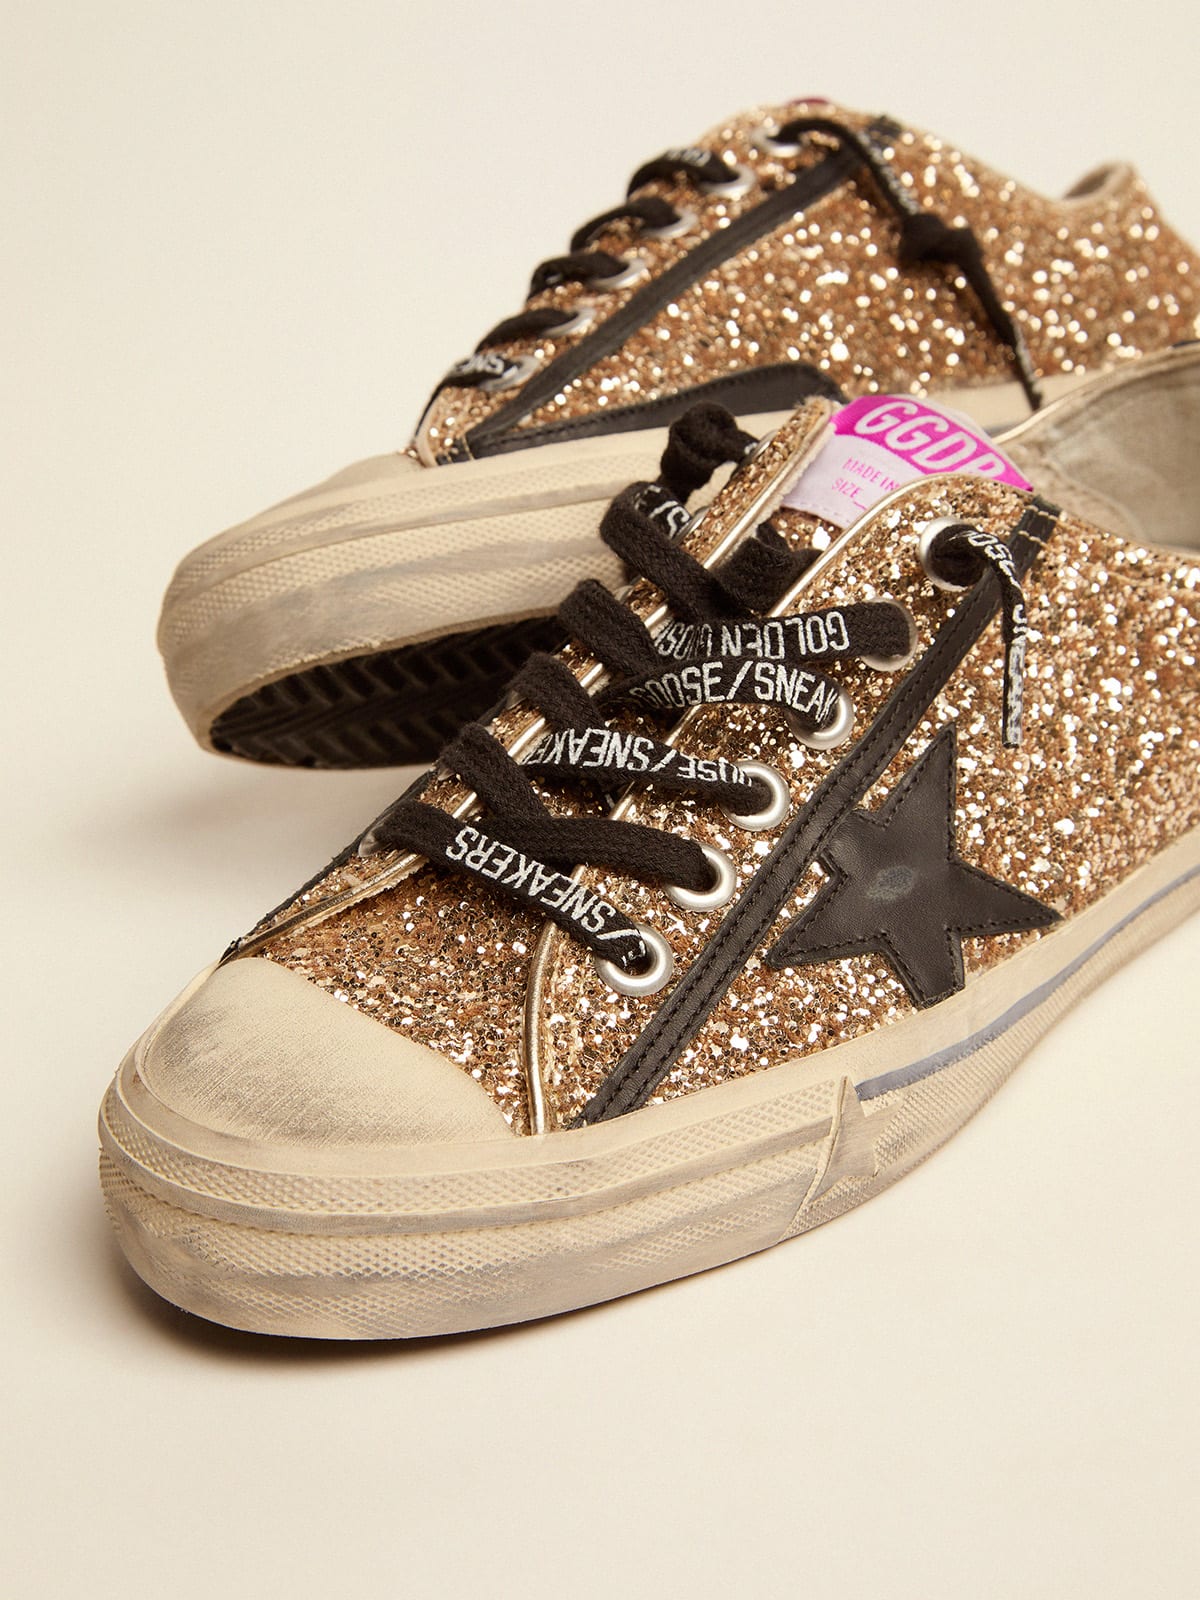 V-star LTD sneakers in gold glitter with black details | Golden Goose